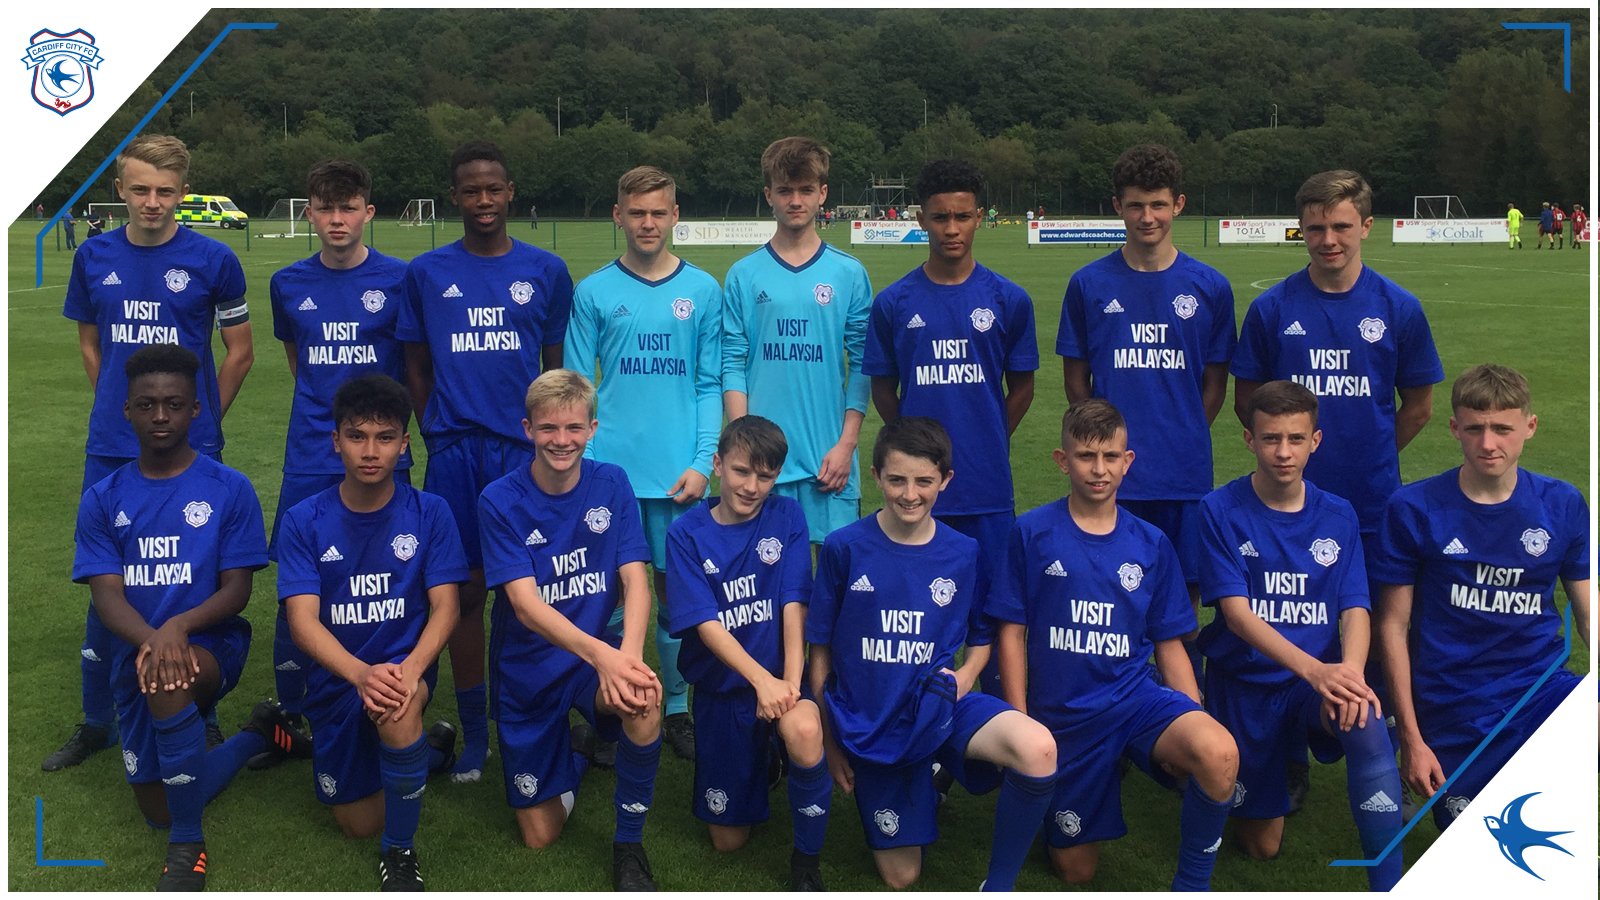 Cardiff City Academy on X: U21  The #Bluebirds defeat the Blades